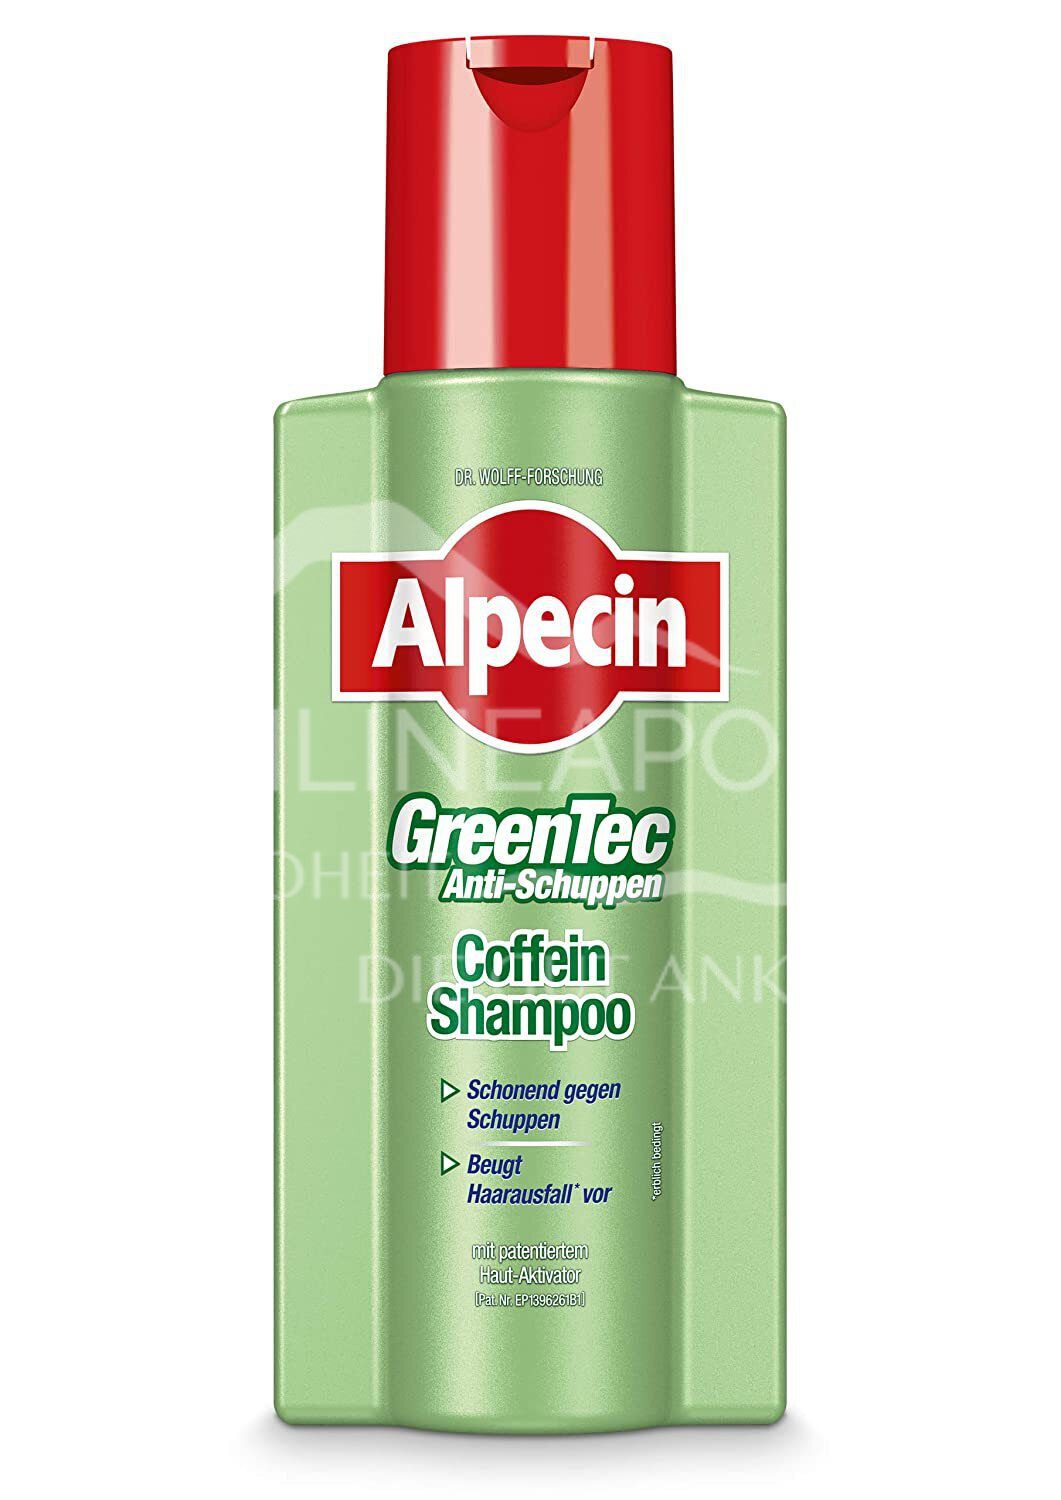 Alpecin GreenTec Anti-Schuppen Coffein Shampoo